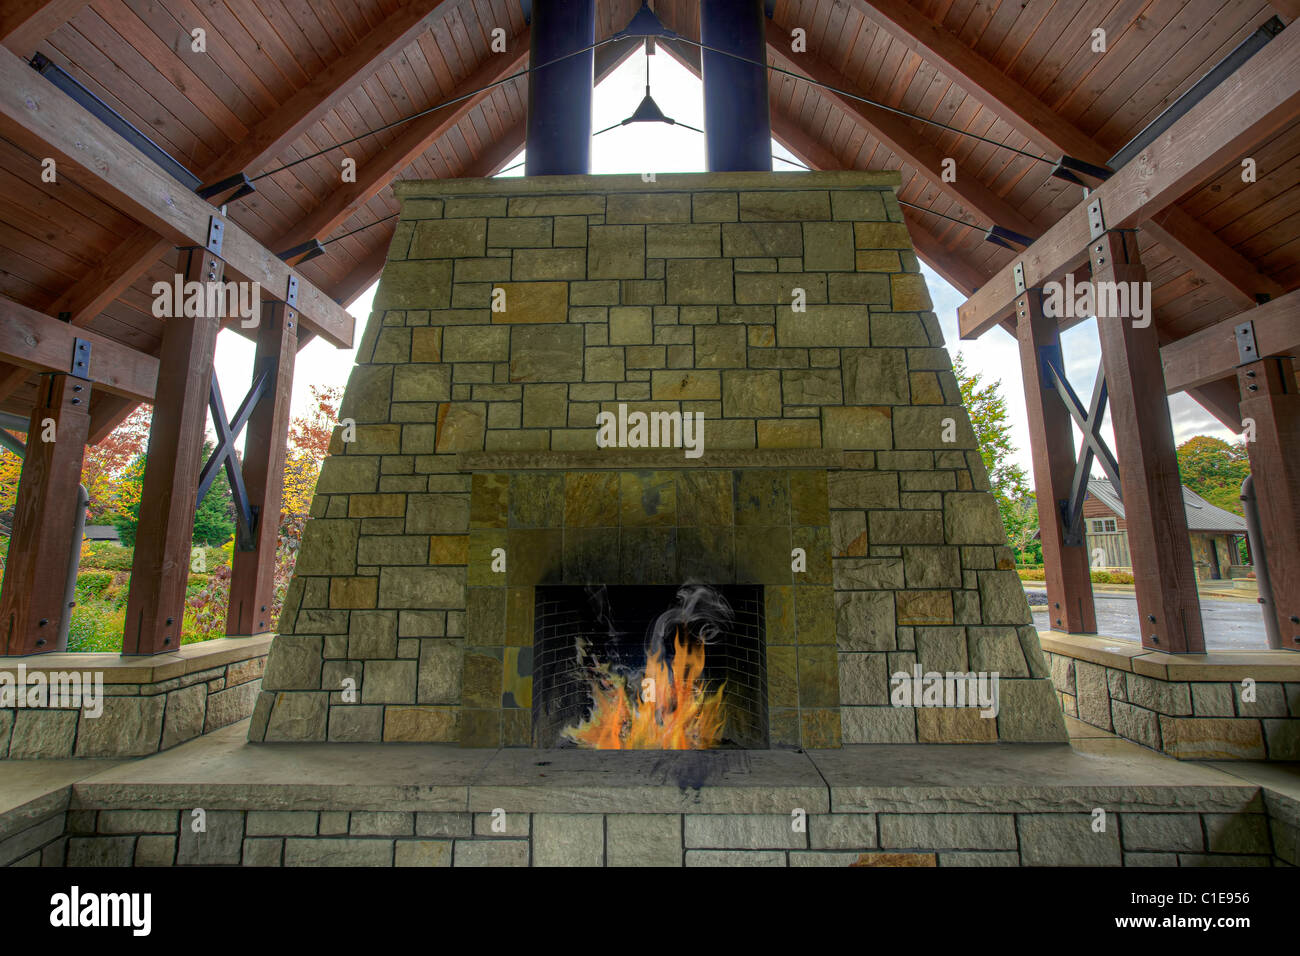 Outdoor Garden Backyard Stone Fireplace in Public Park Stock Photo